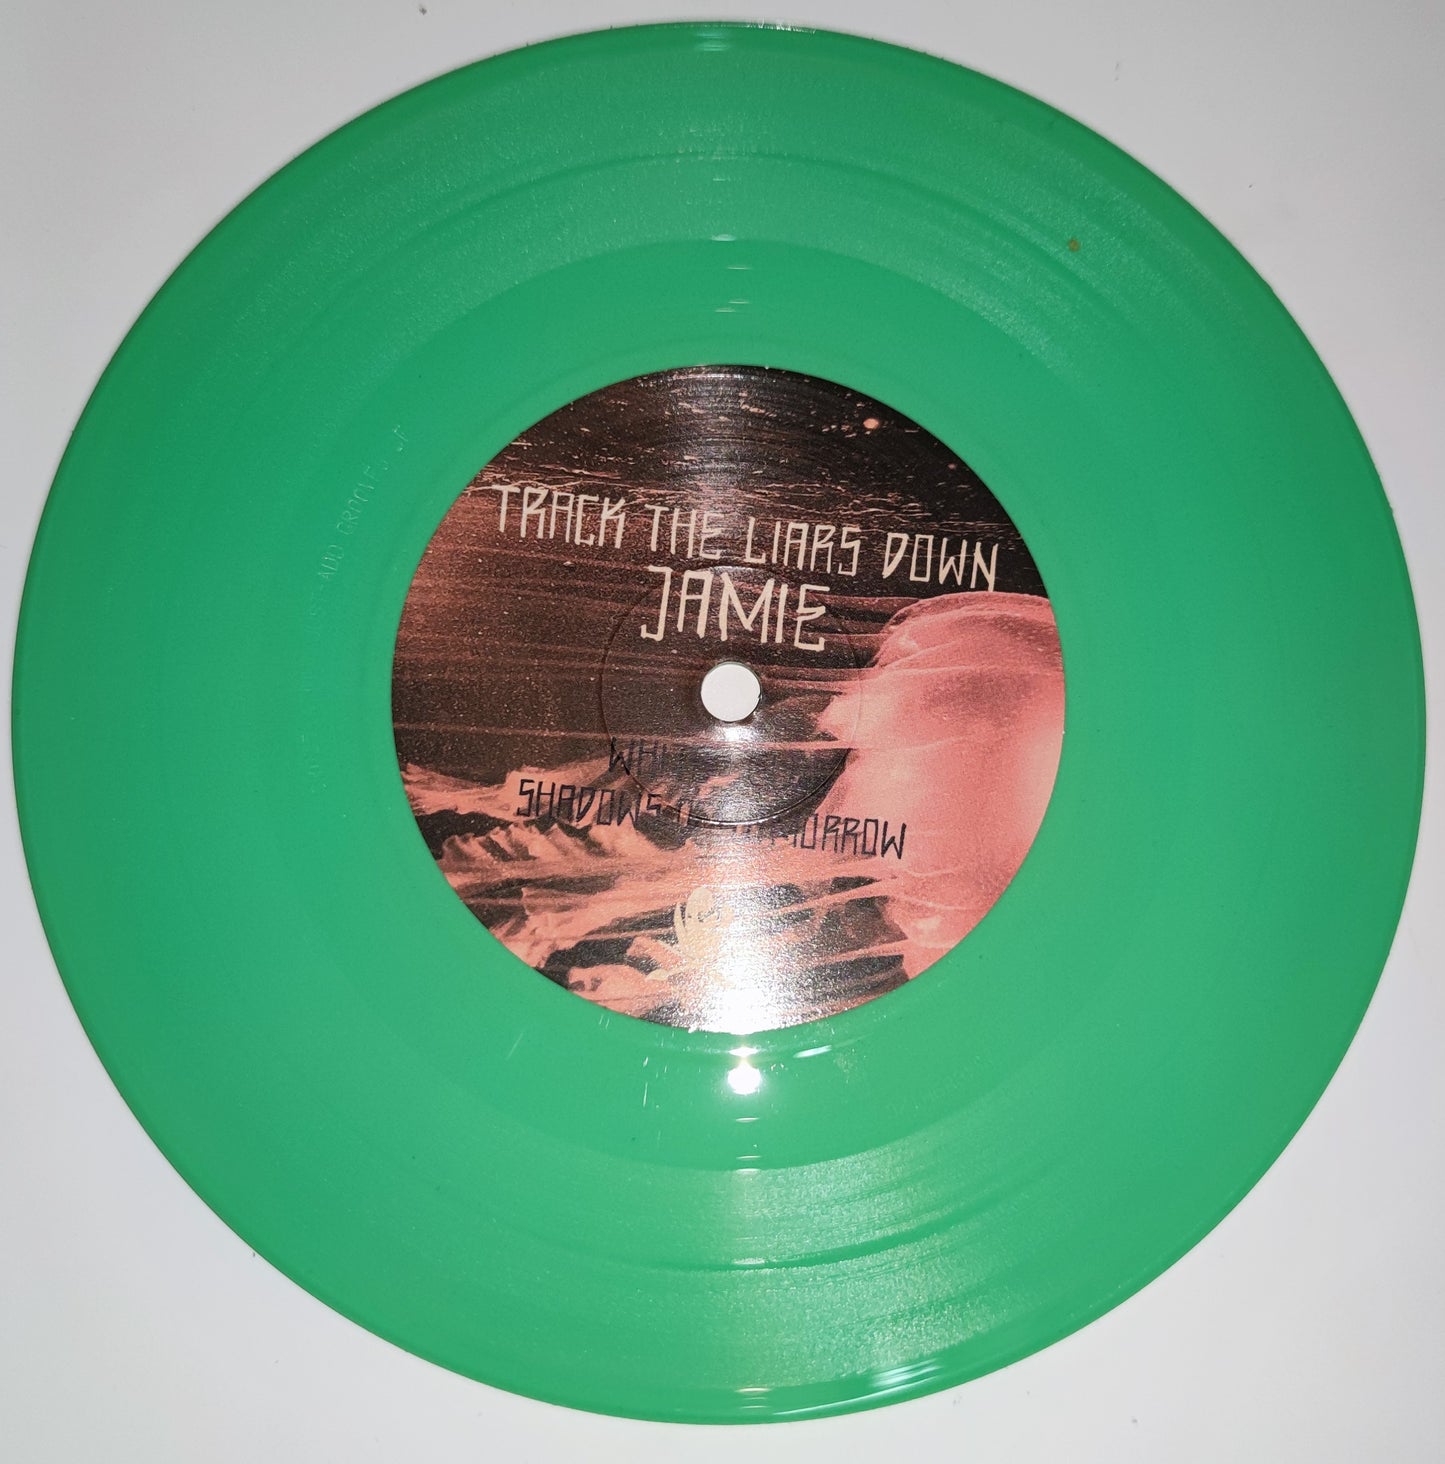 Track the Liars Down - Jamie 7" (poison-green vinyl)